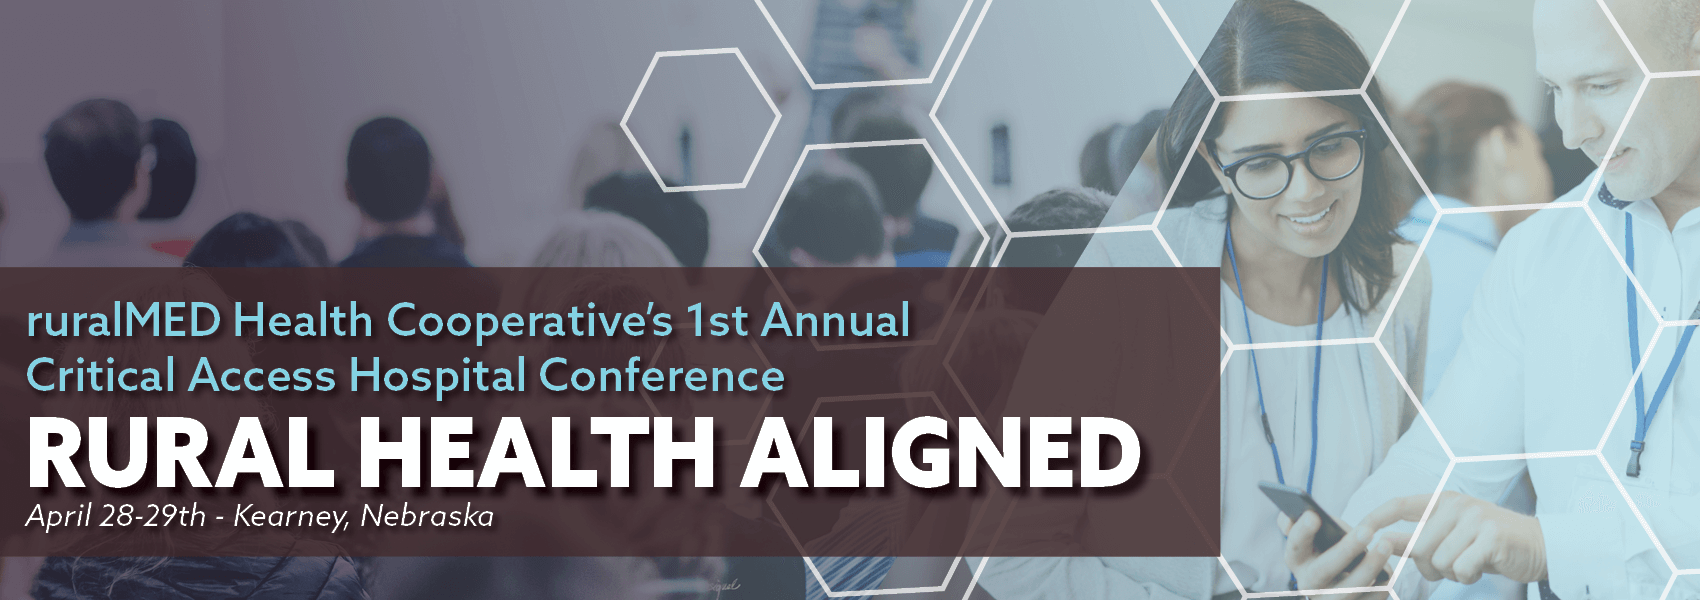 ruralMED Health Cooperative’s 1st Annual Critical Access Hospital Conference: Rural Health Aligned